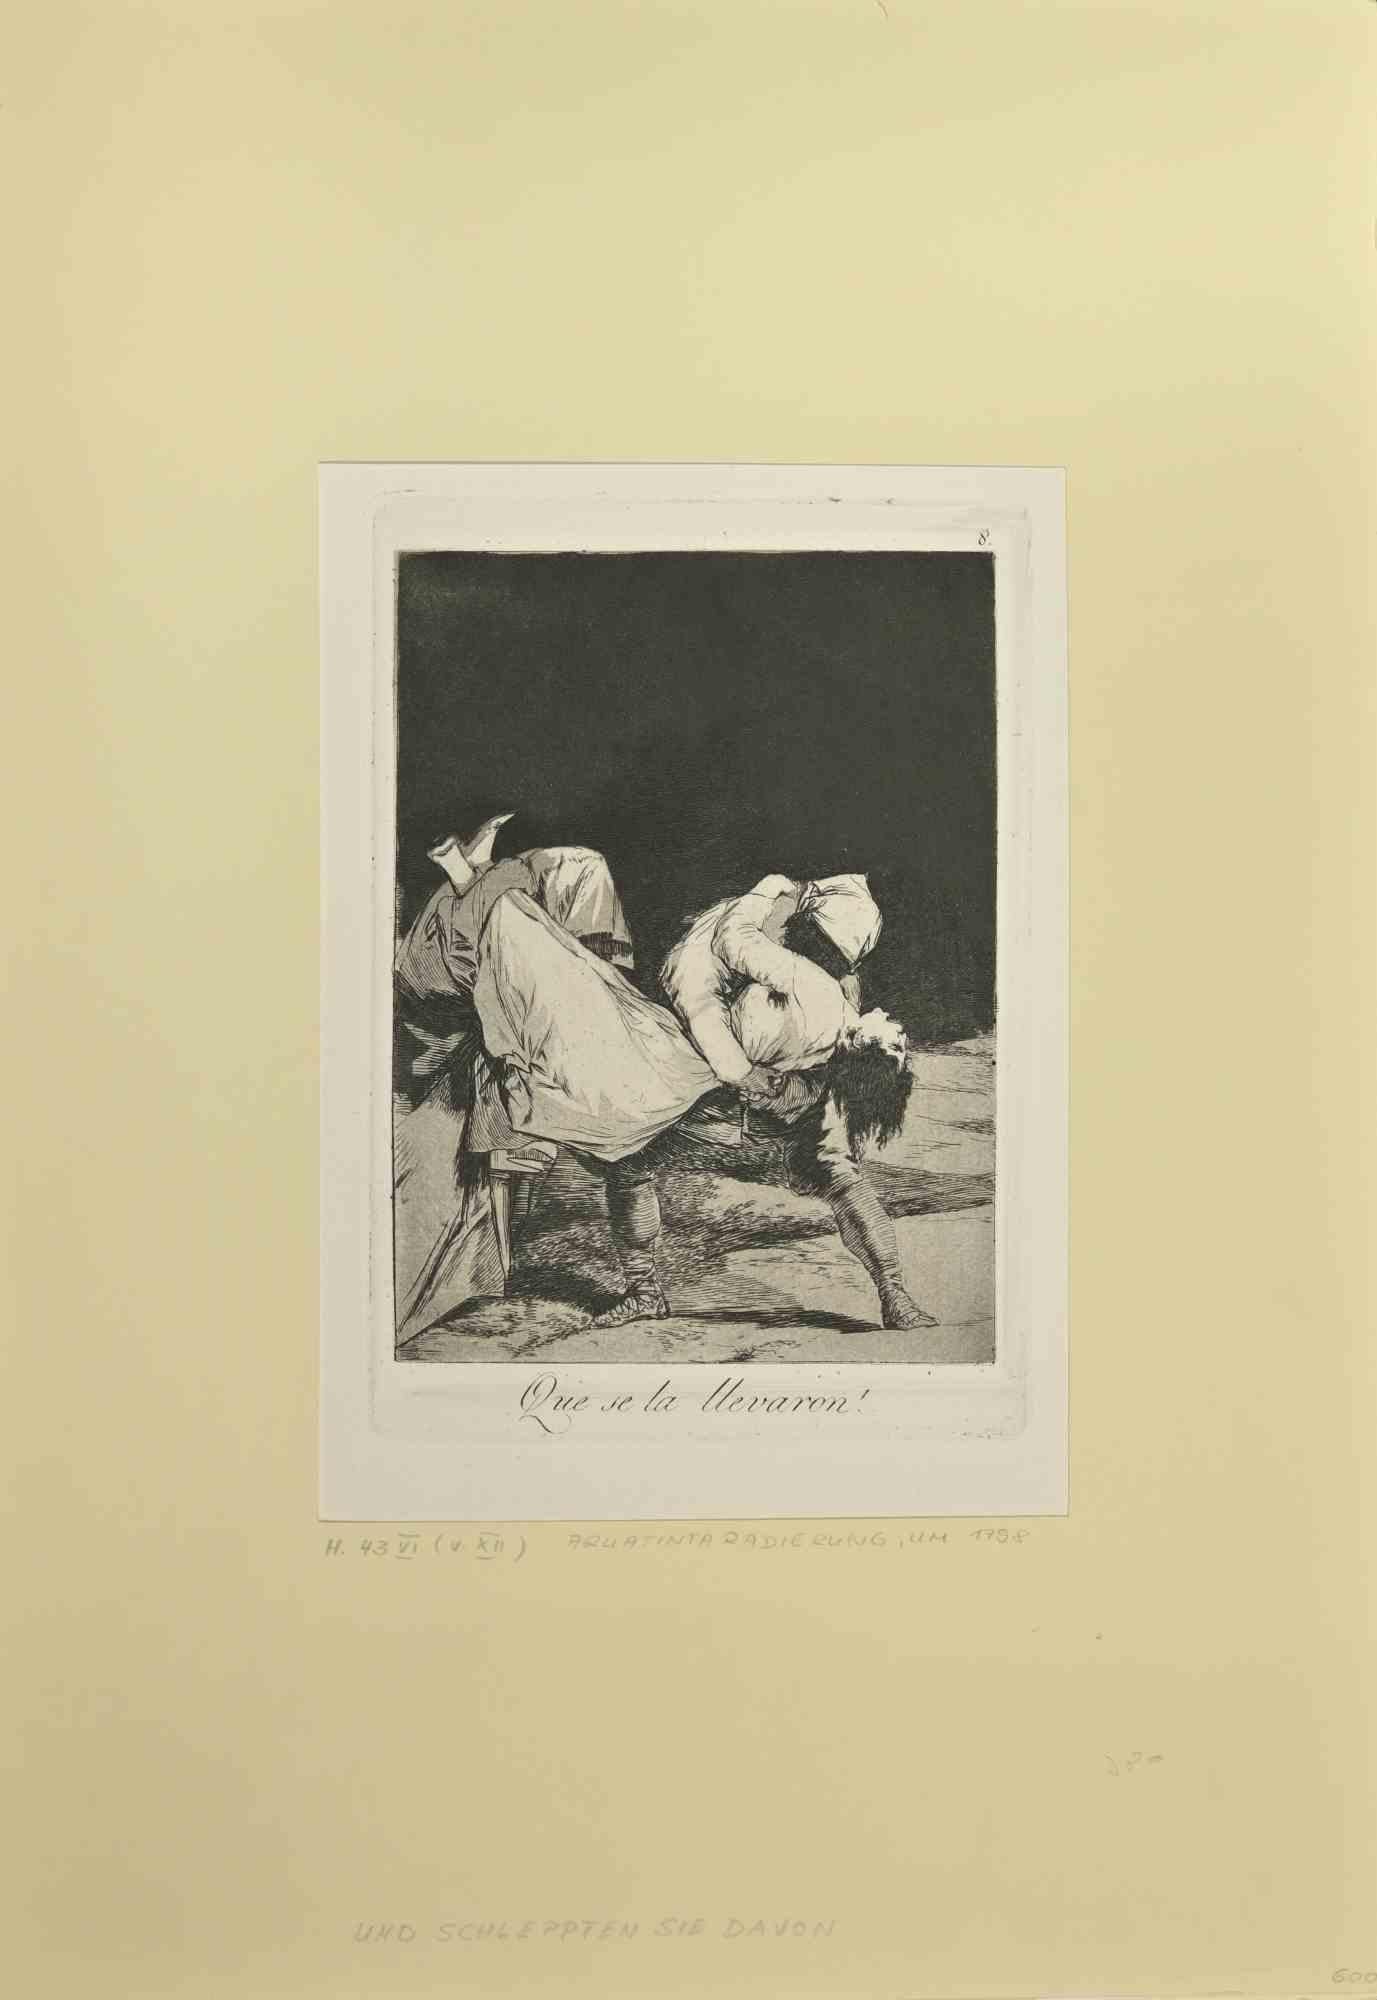 Que se llevaron!  - Etching by Francisco Goya - 1868 1